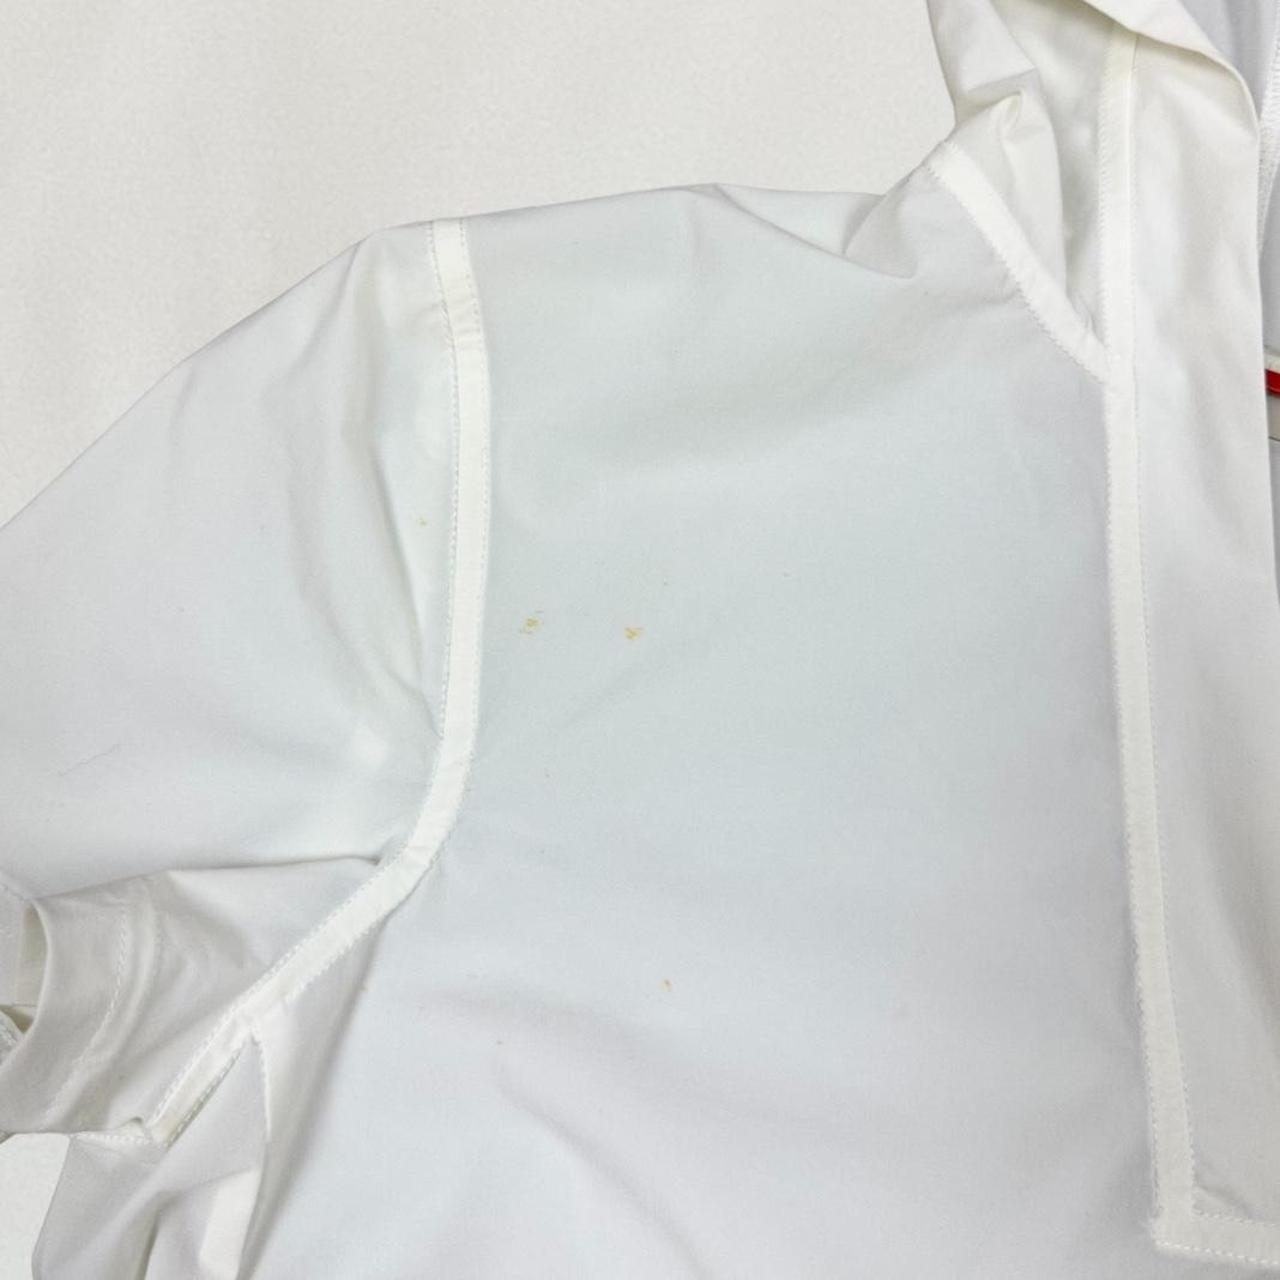 Prada sport hooded t shirt - Size medium, shown on... - Depop